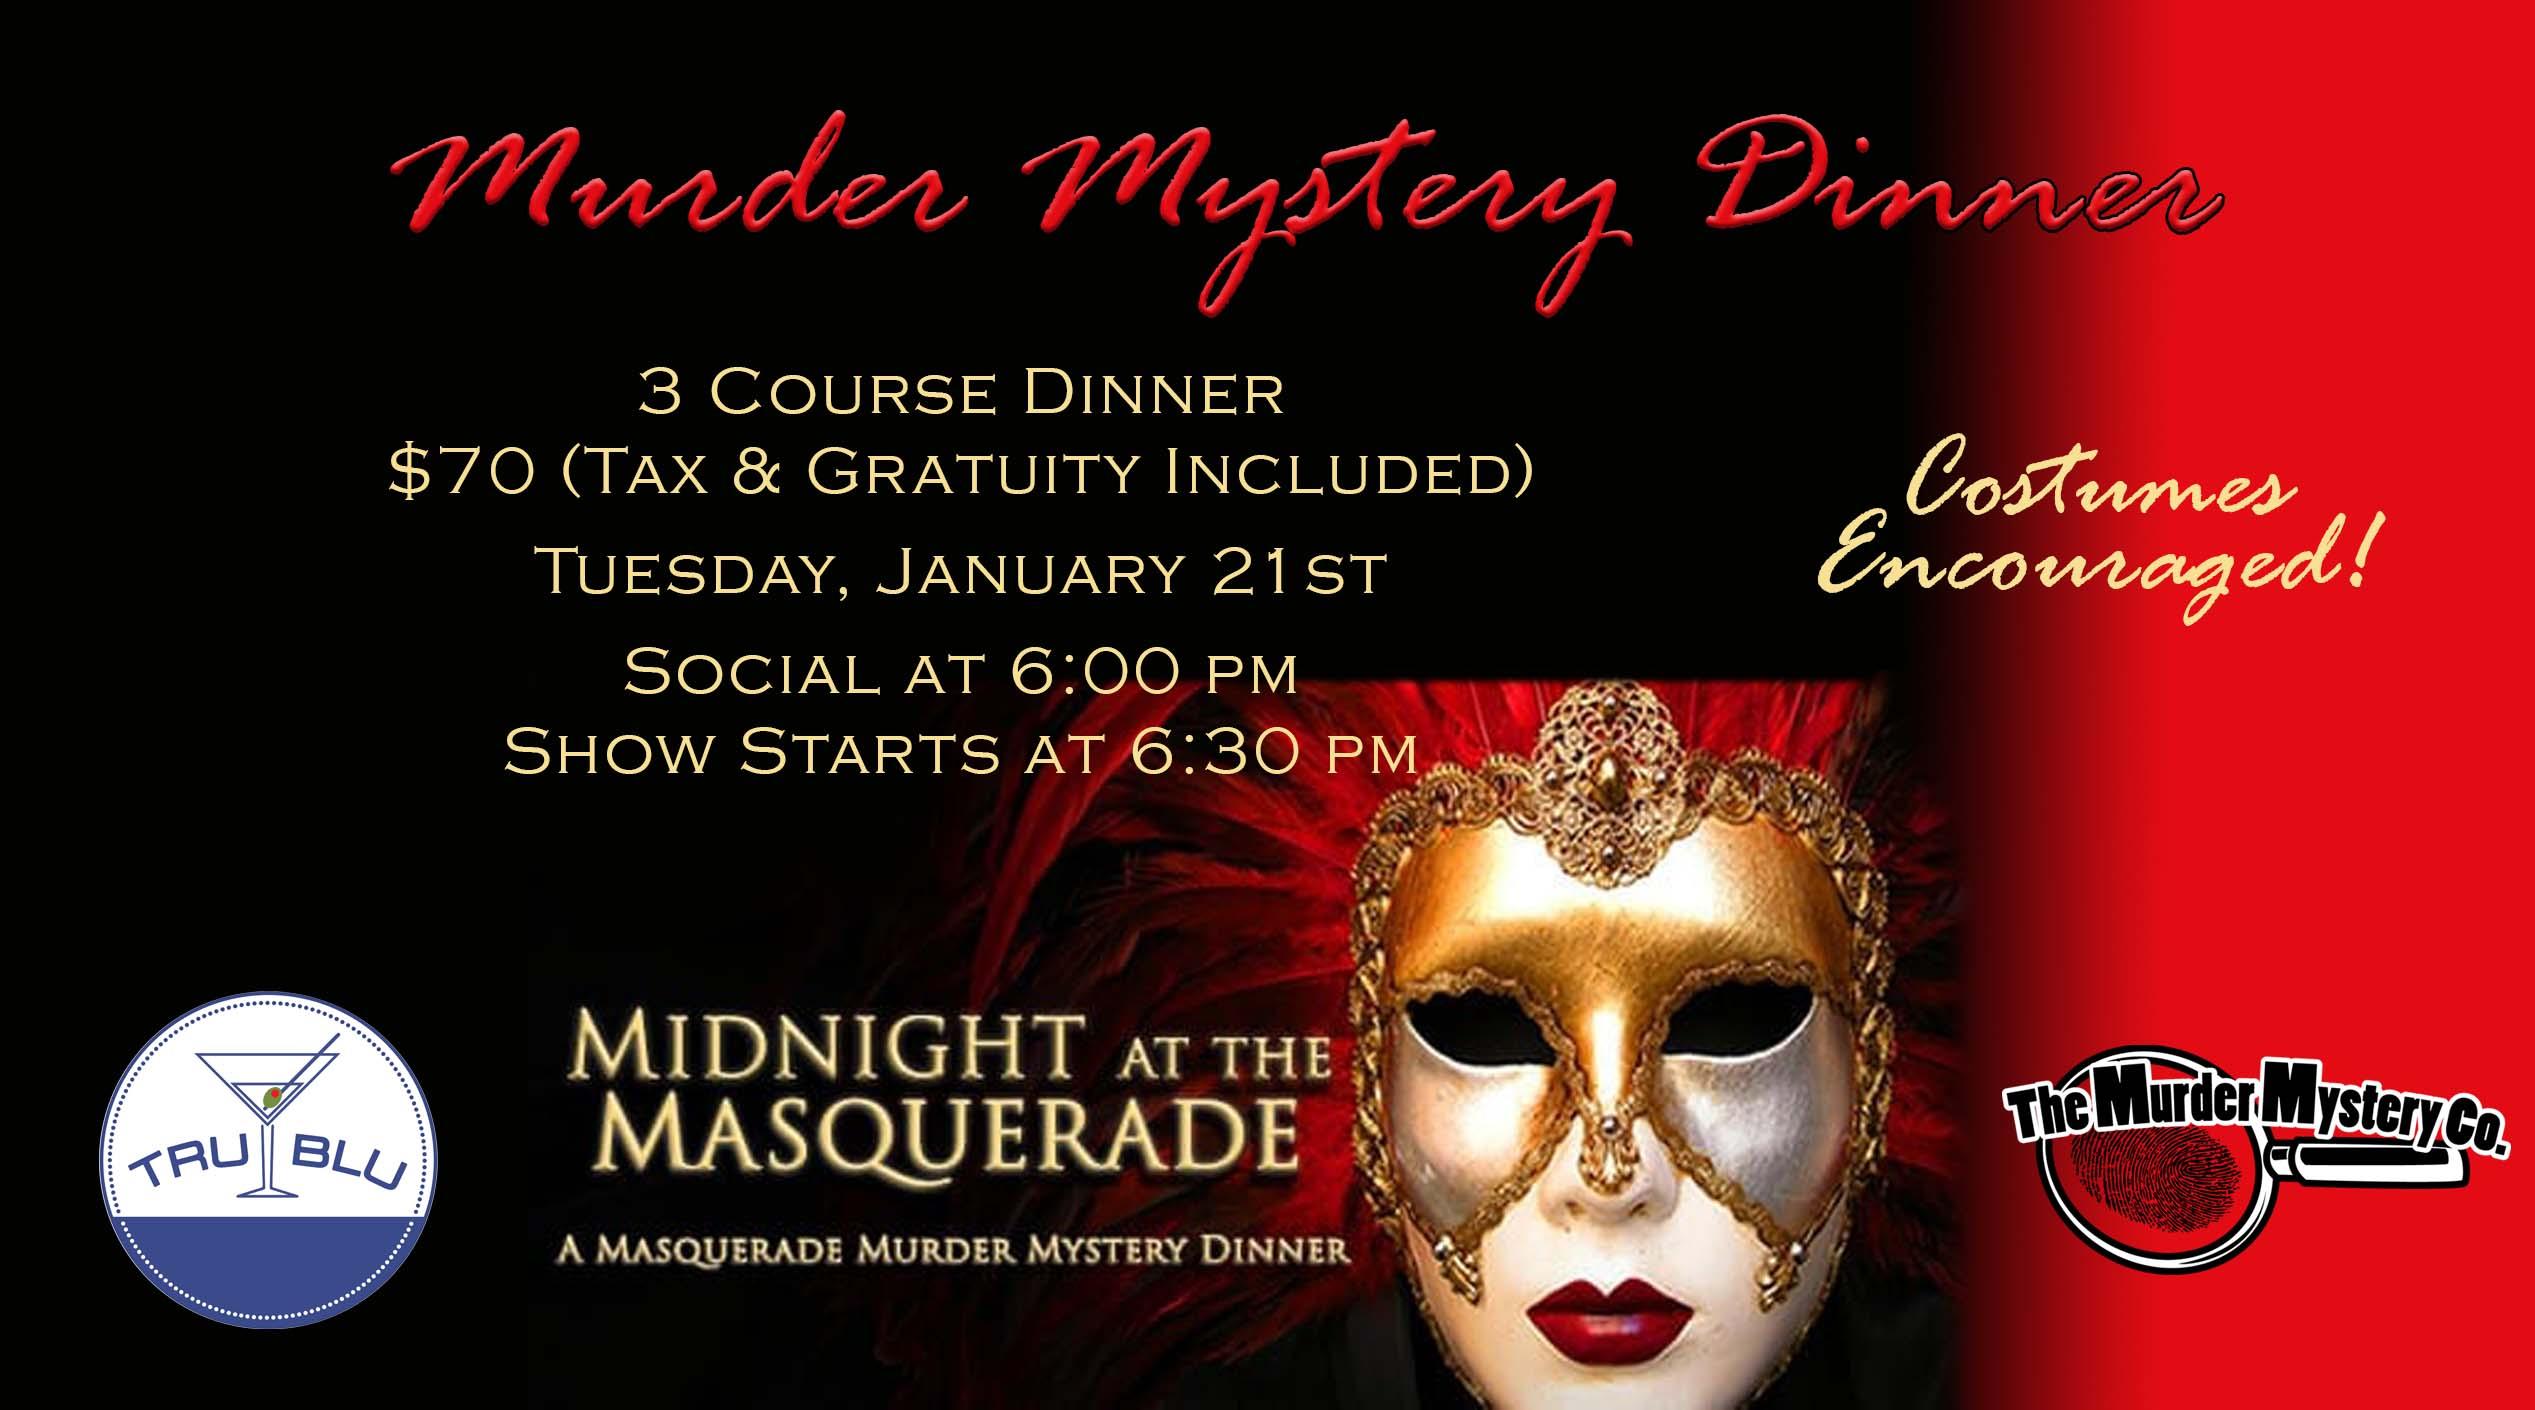 Murder Mystery Dinner - Tuesday